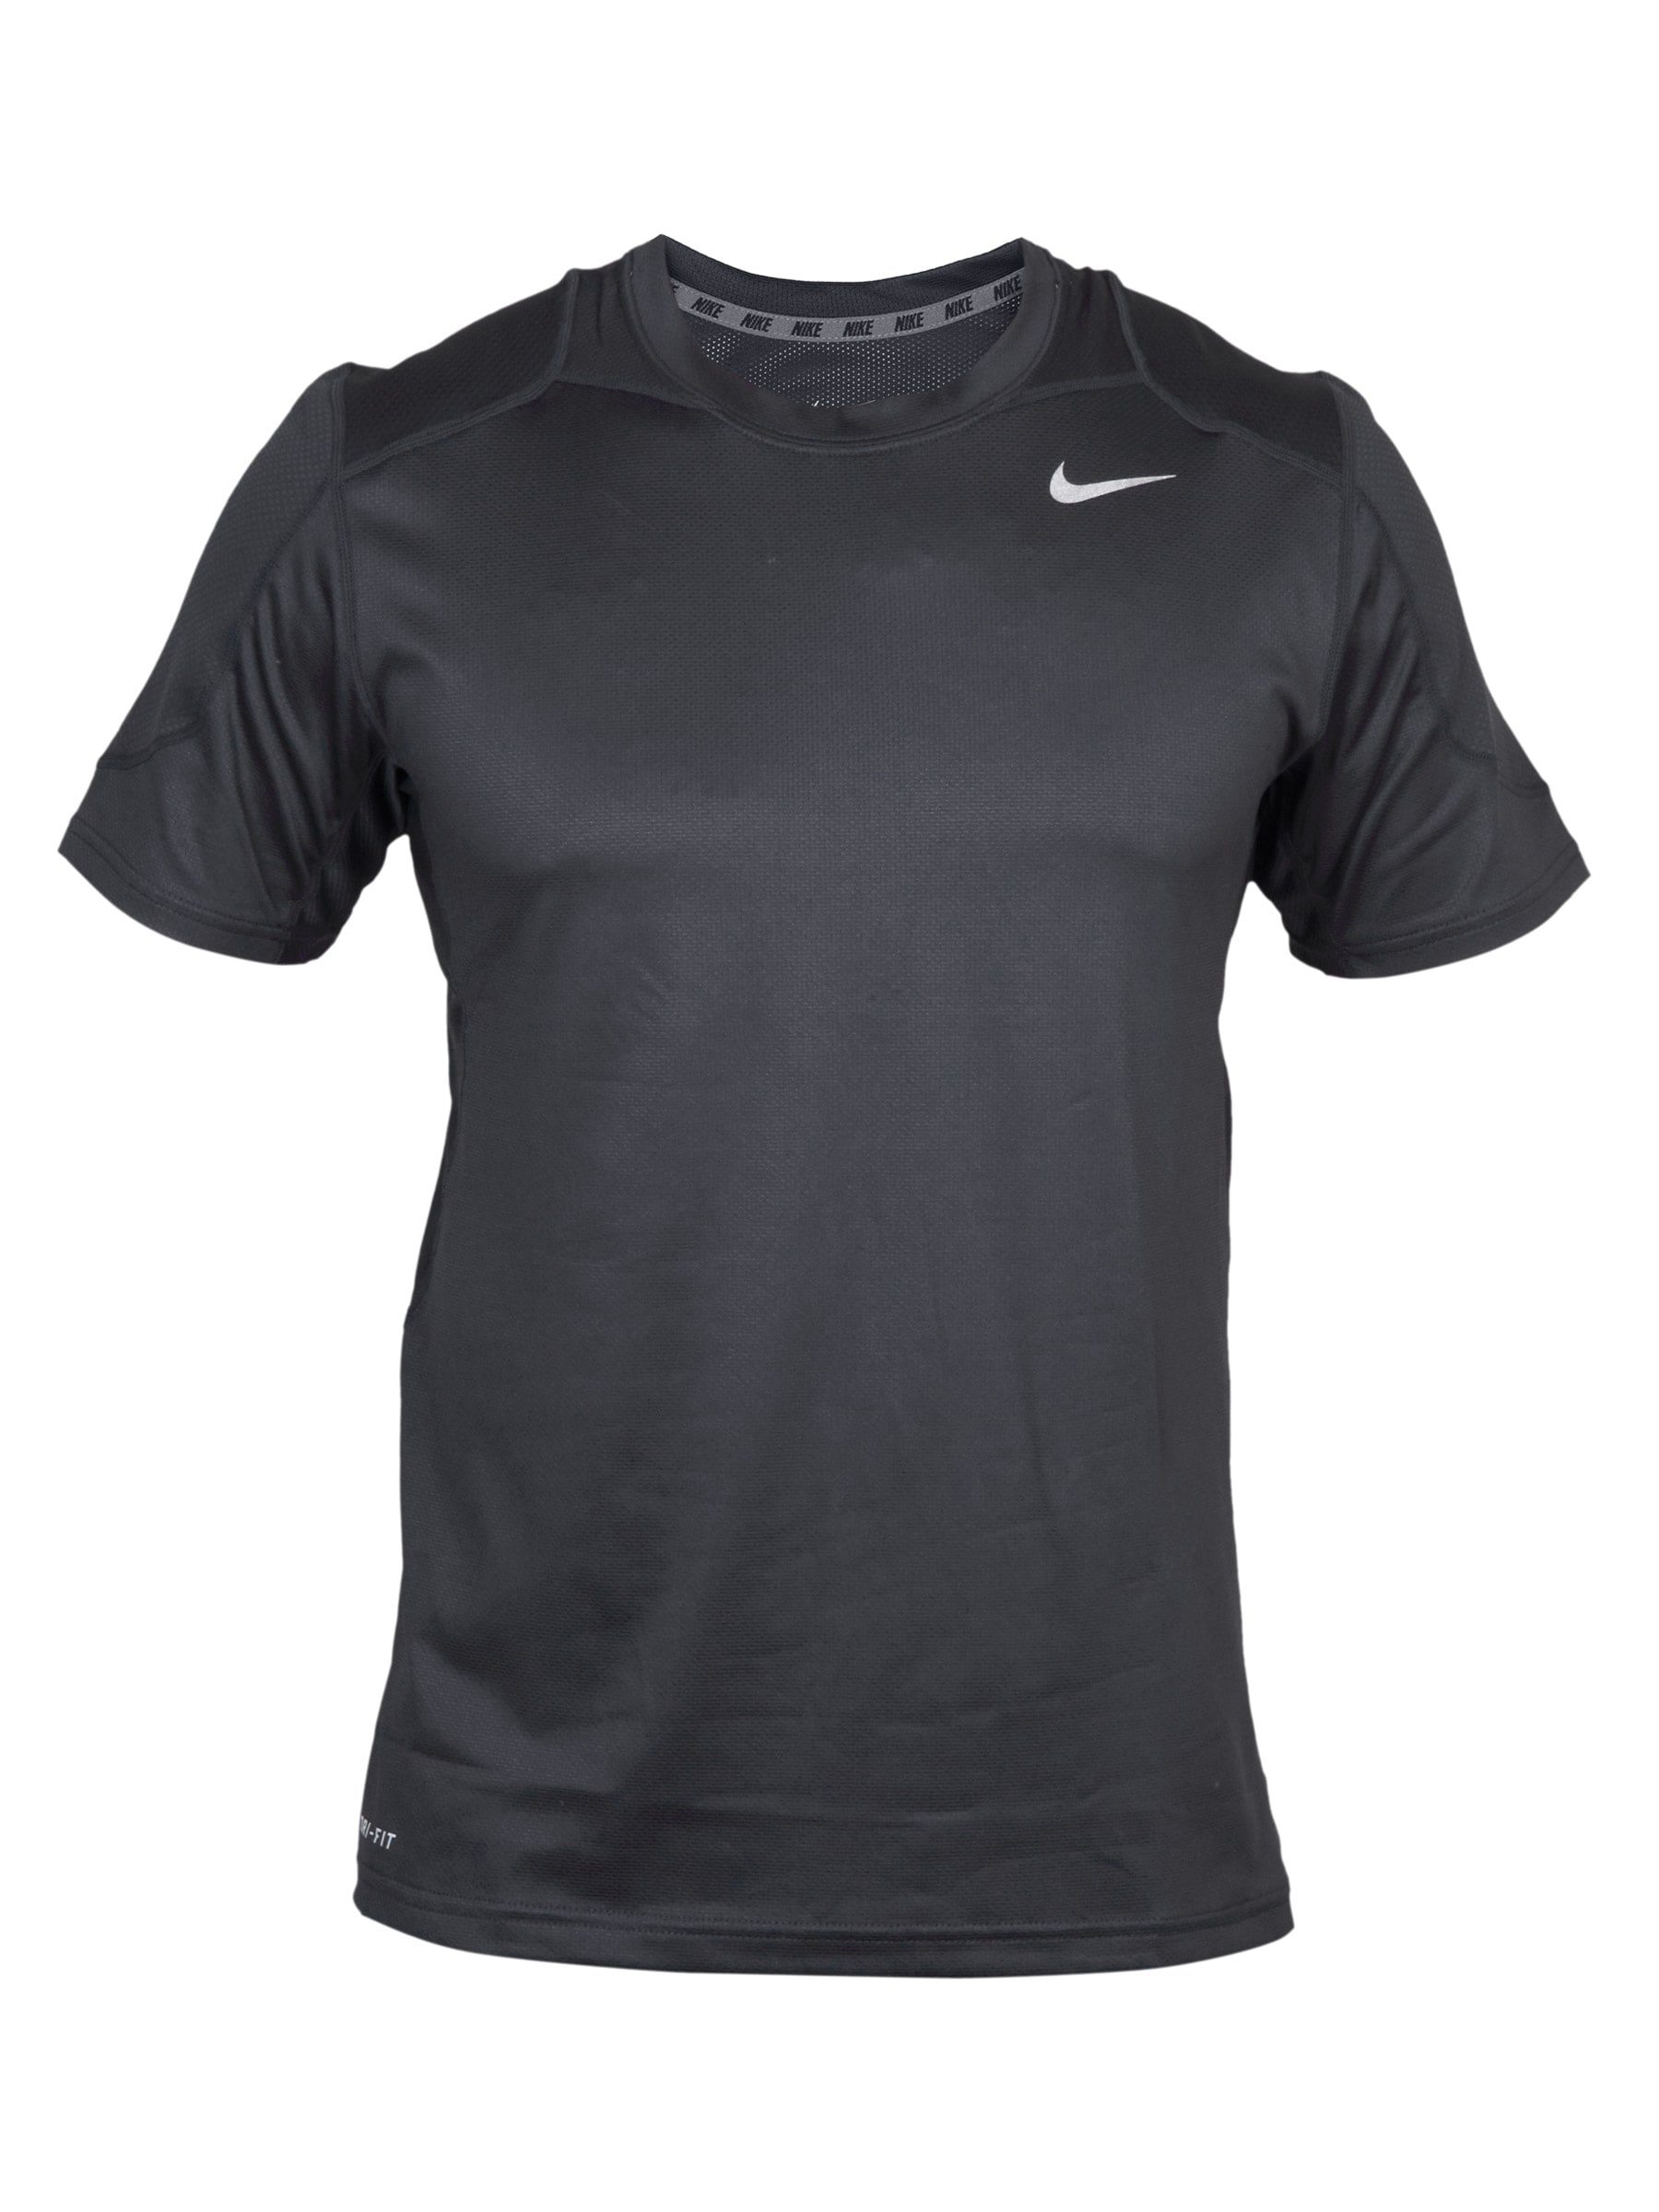 Nike mens As Vapor SS black T-shirt